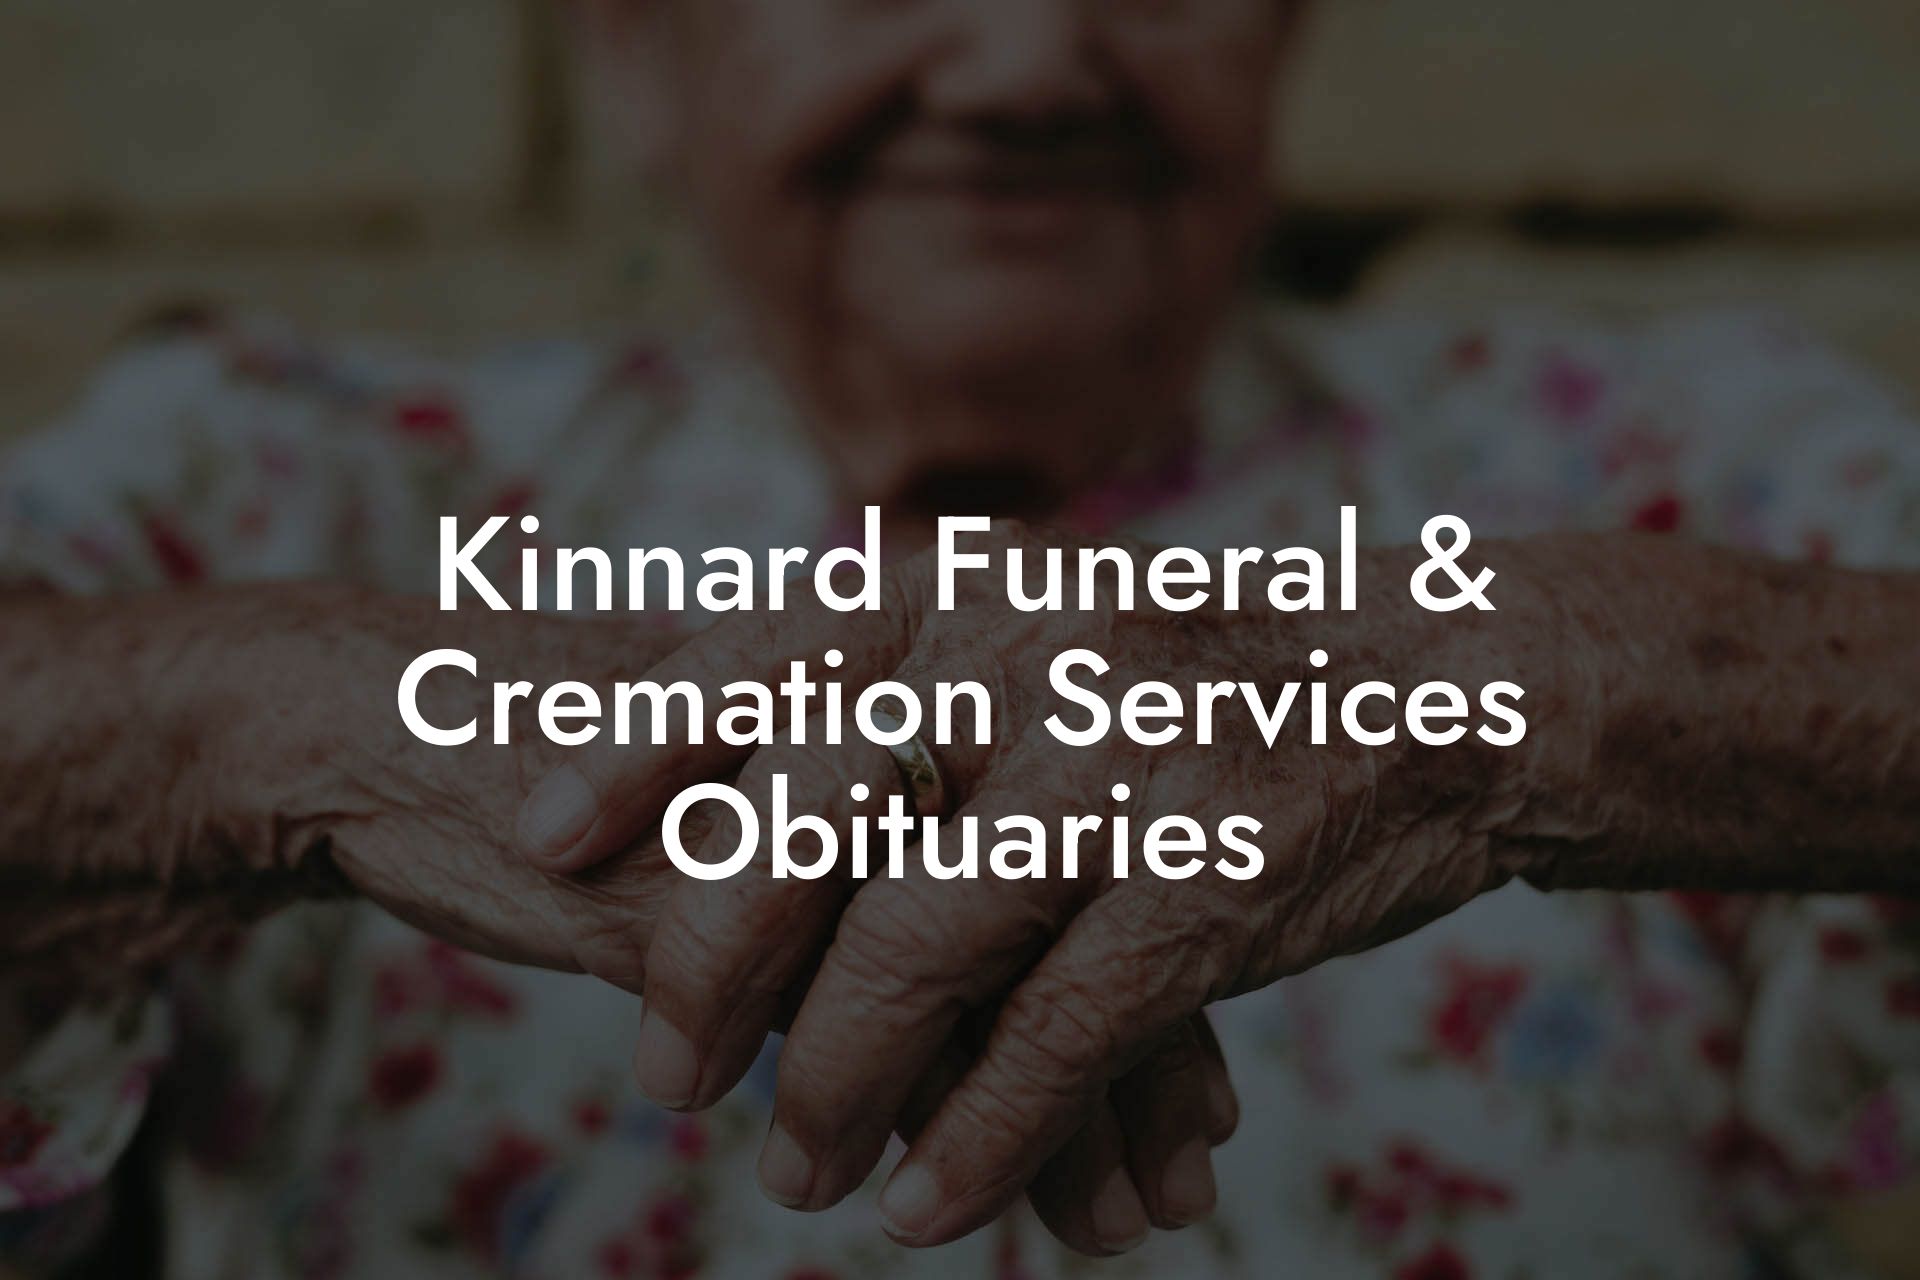 Kinnard Funeral & Cremation Services Obituaries